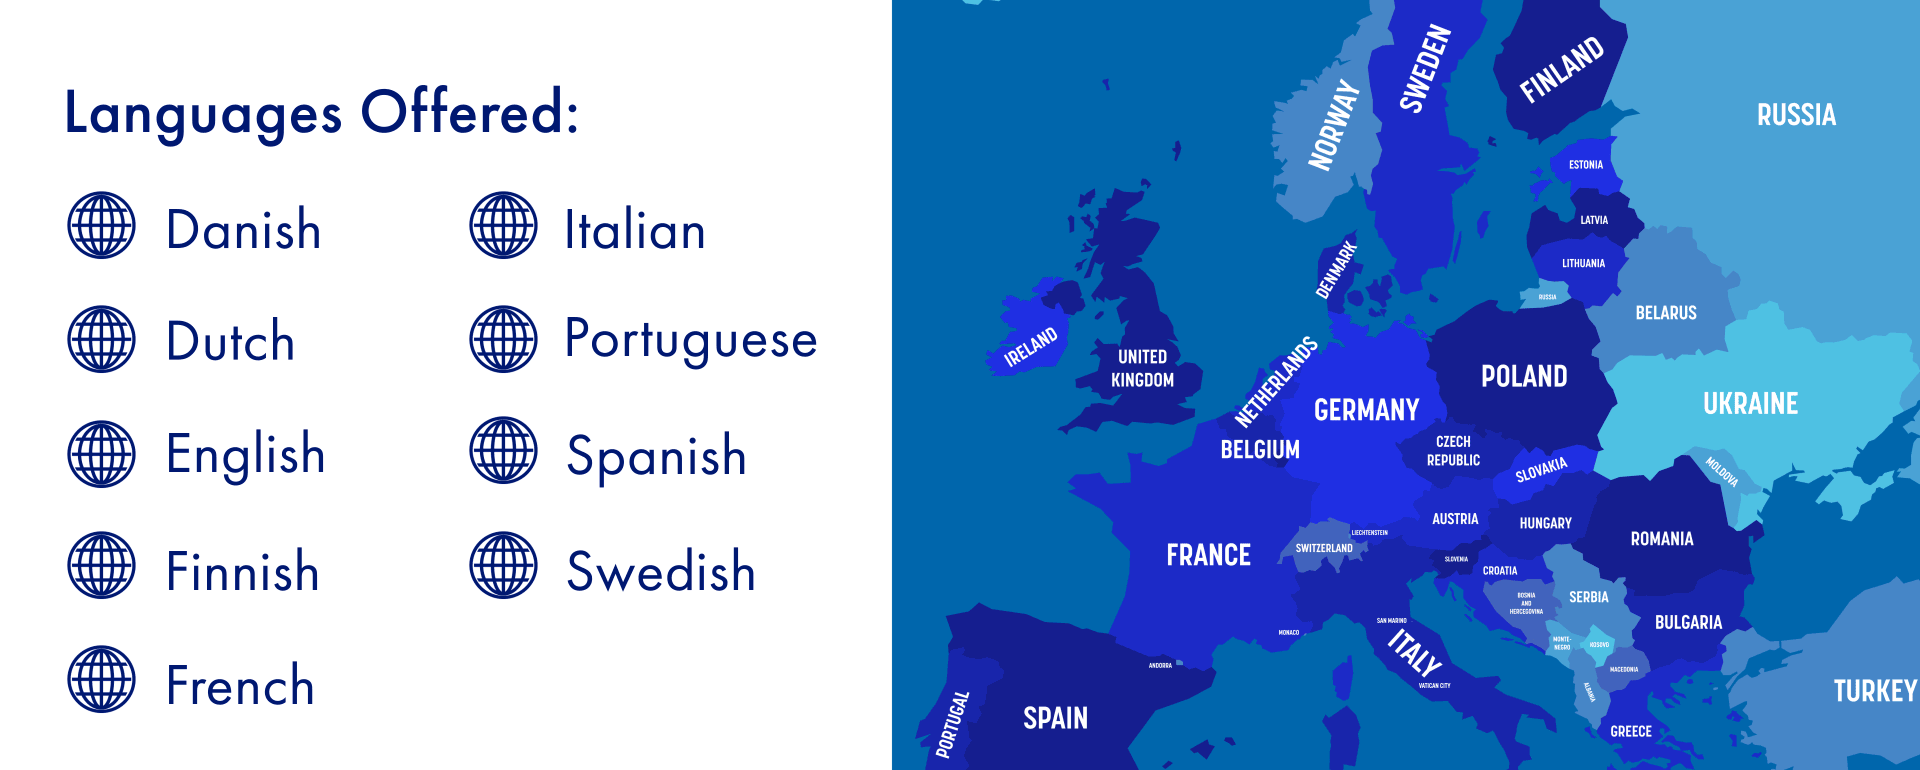 AIG Virtual Care Program: Languages Offered. Danish, Dutch, English, Finnish, French, Italian, Portuguese, Spanish, Swedish